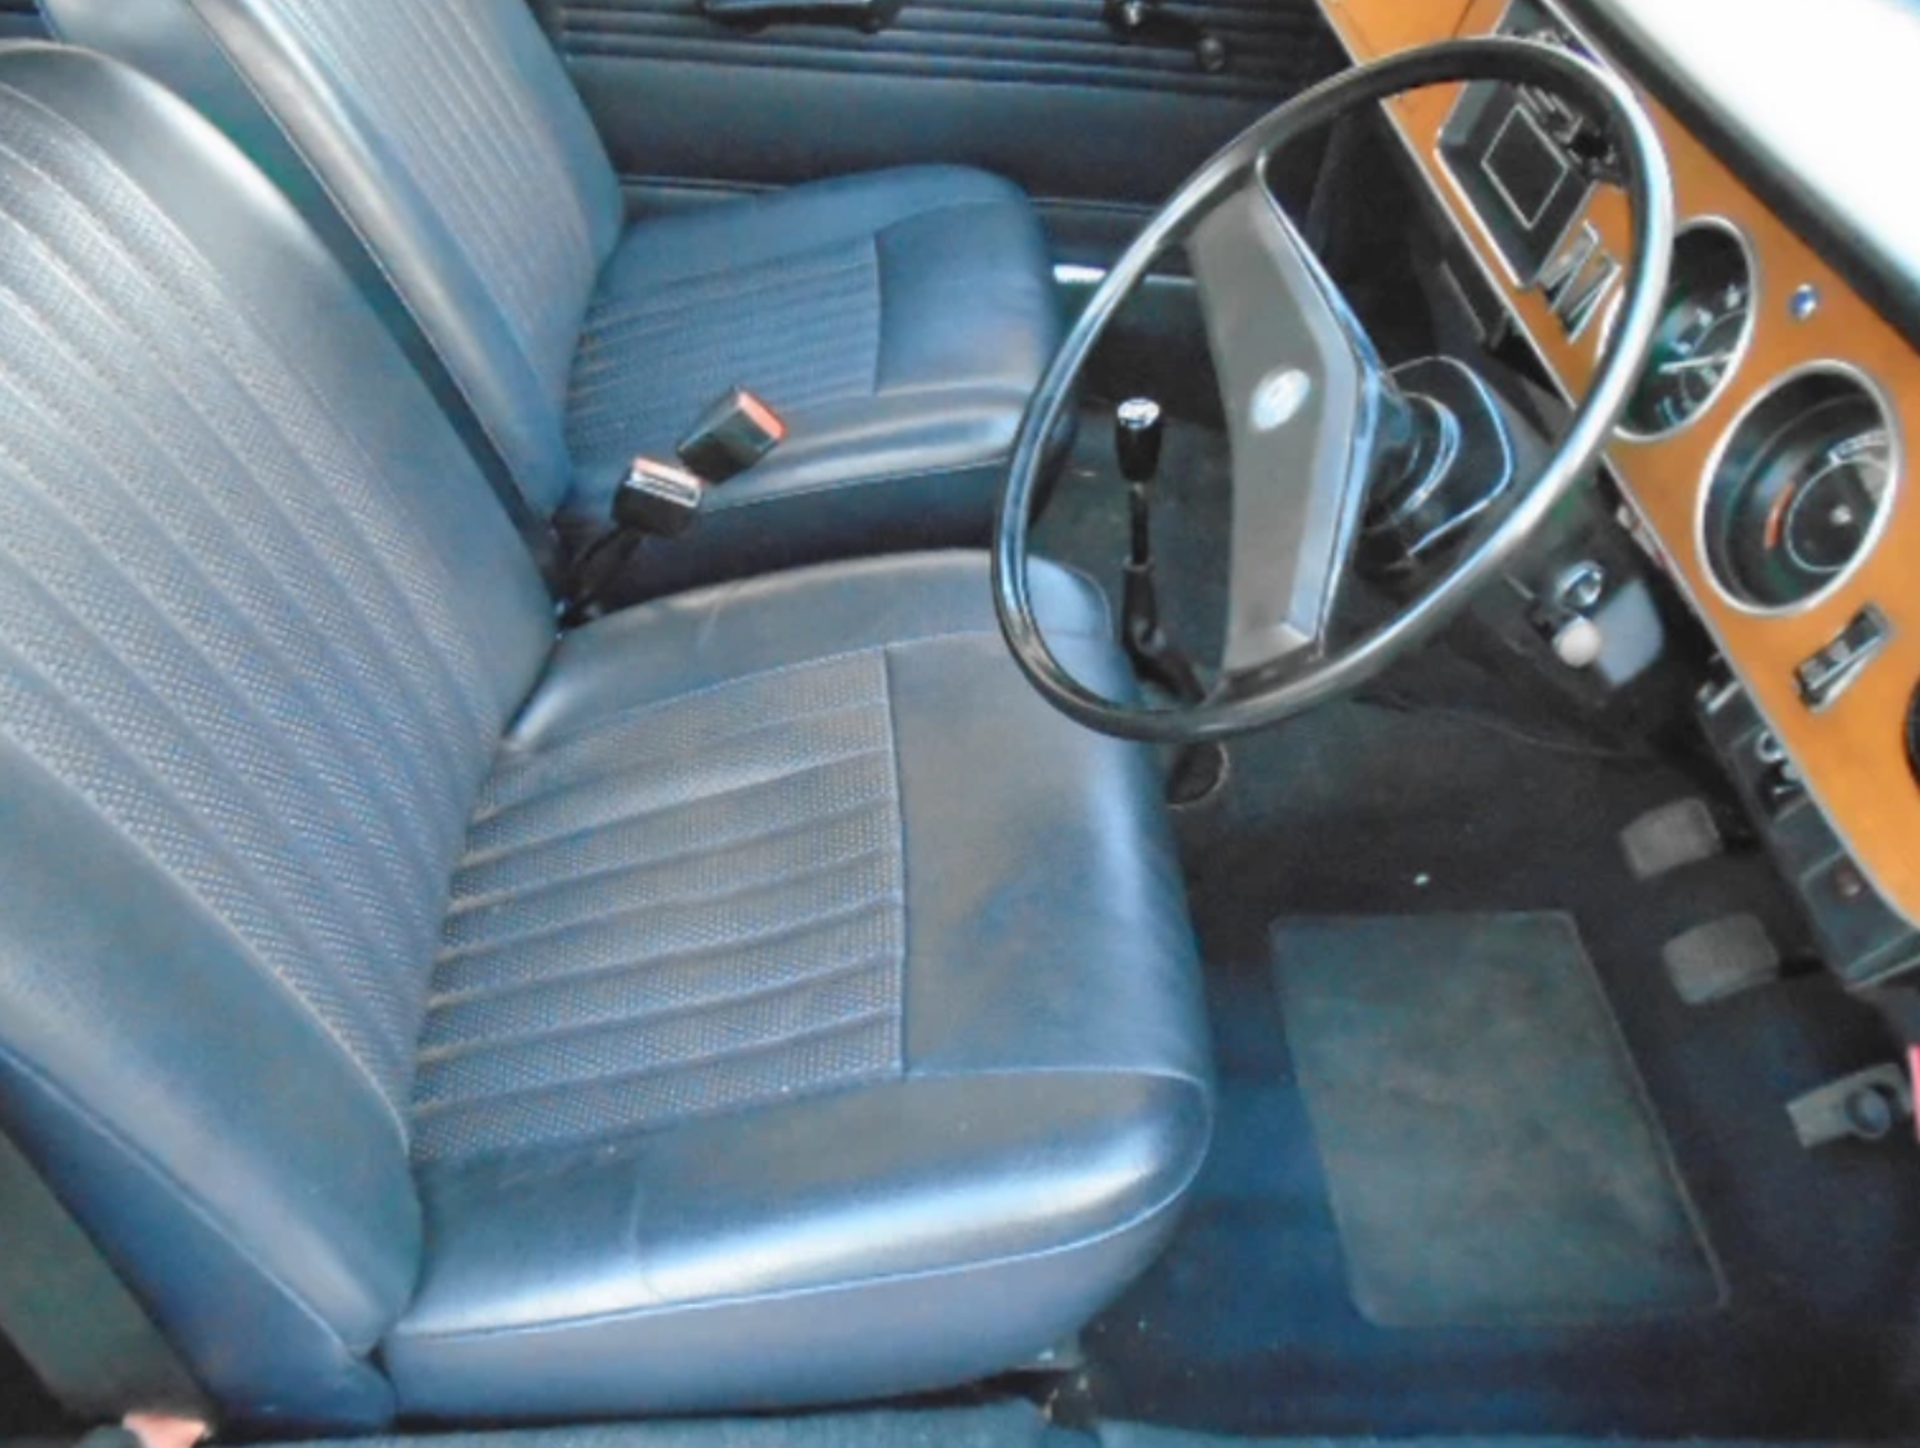 1972 Austin Maxi 1500 - Image 4 of 6